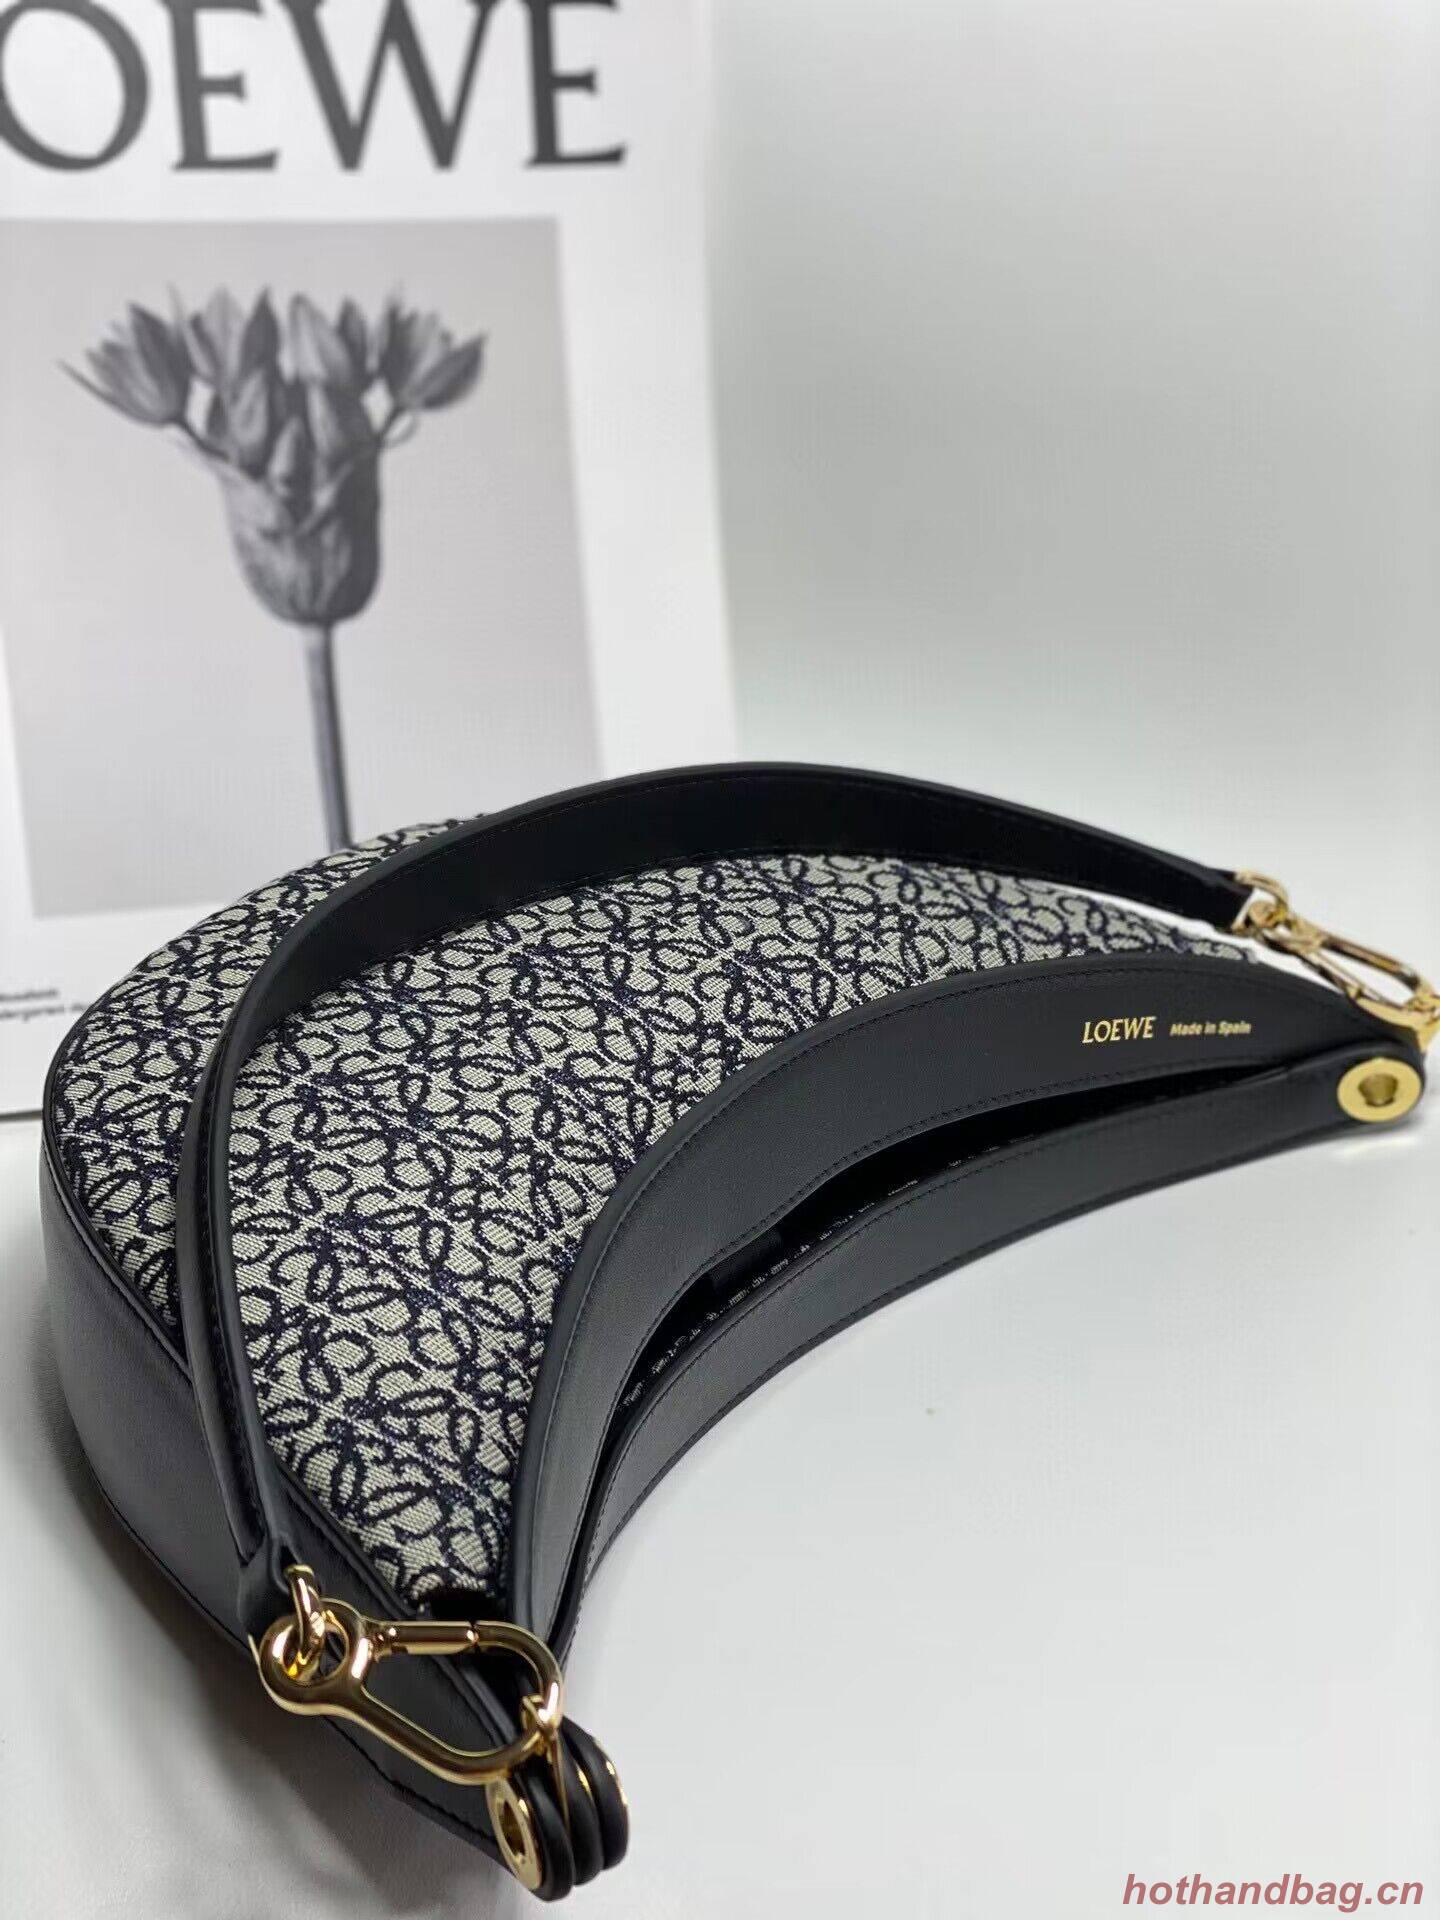 Loewe Original Leather Shoulder Handbag 3073 Black Embroidery